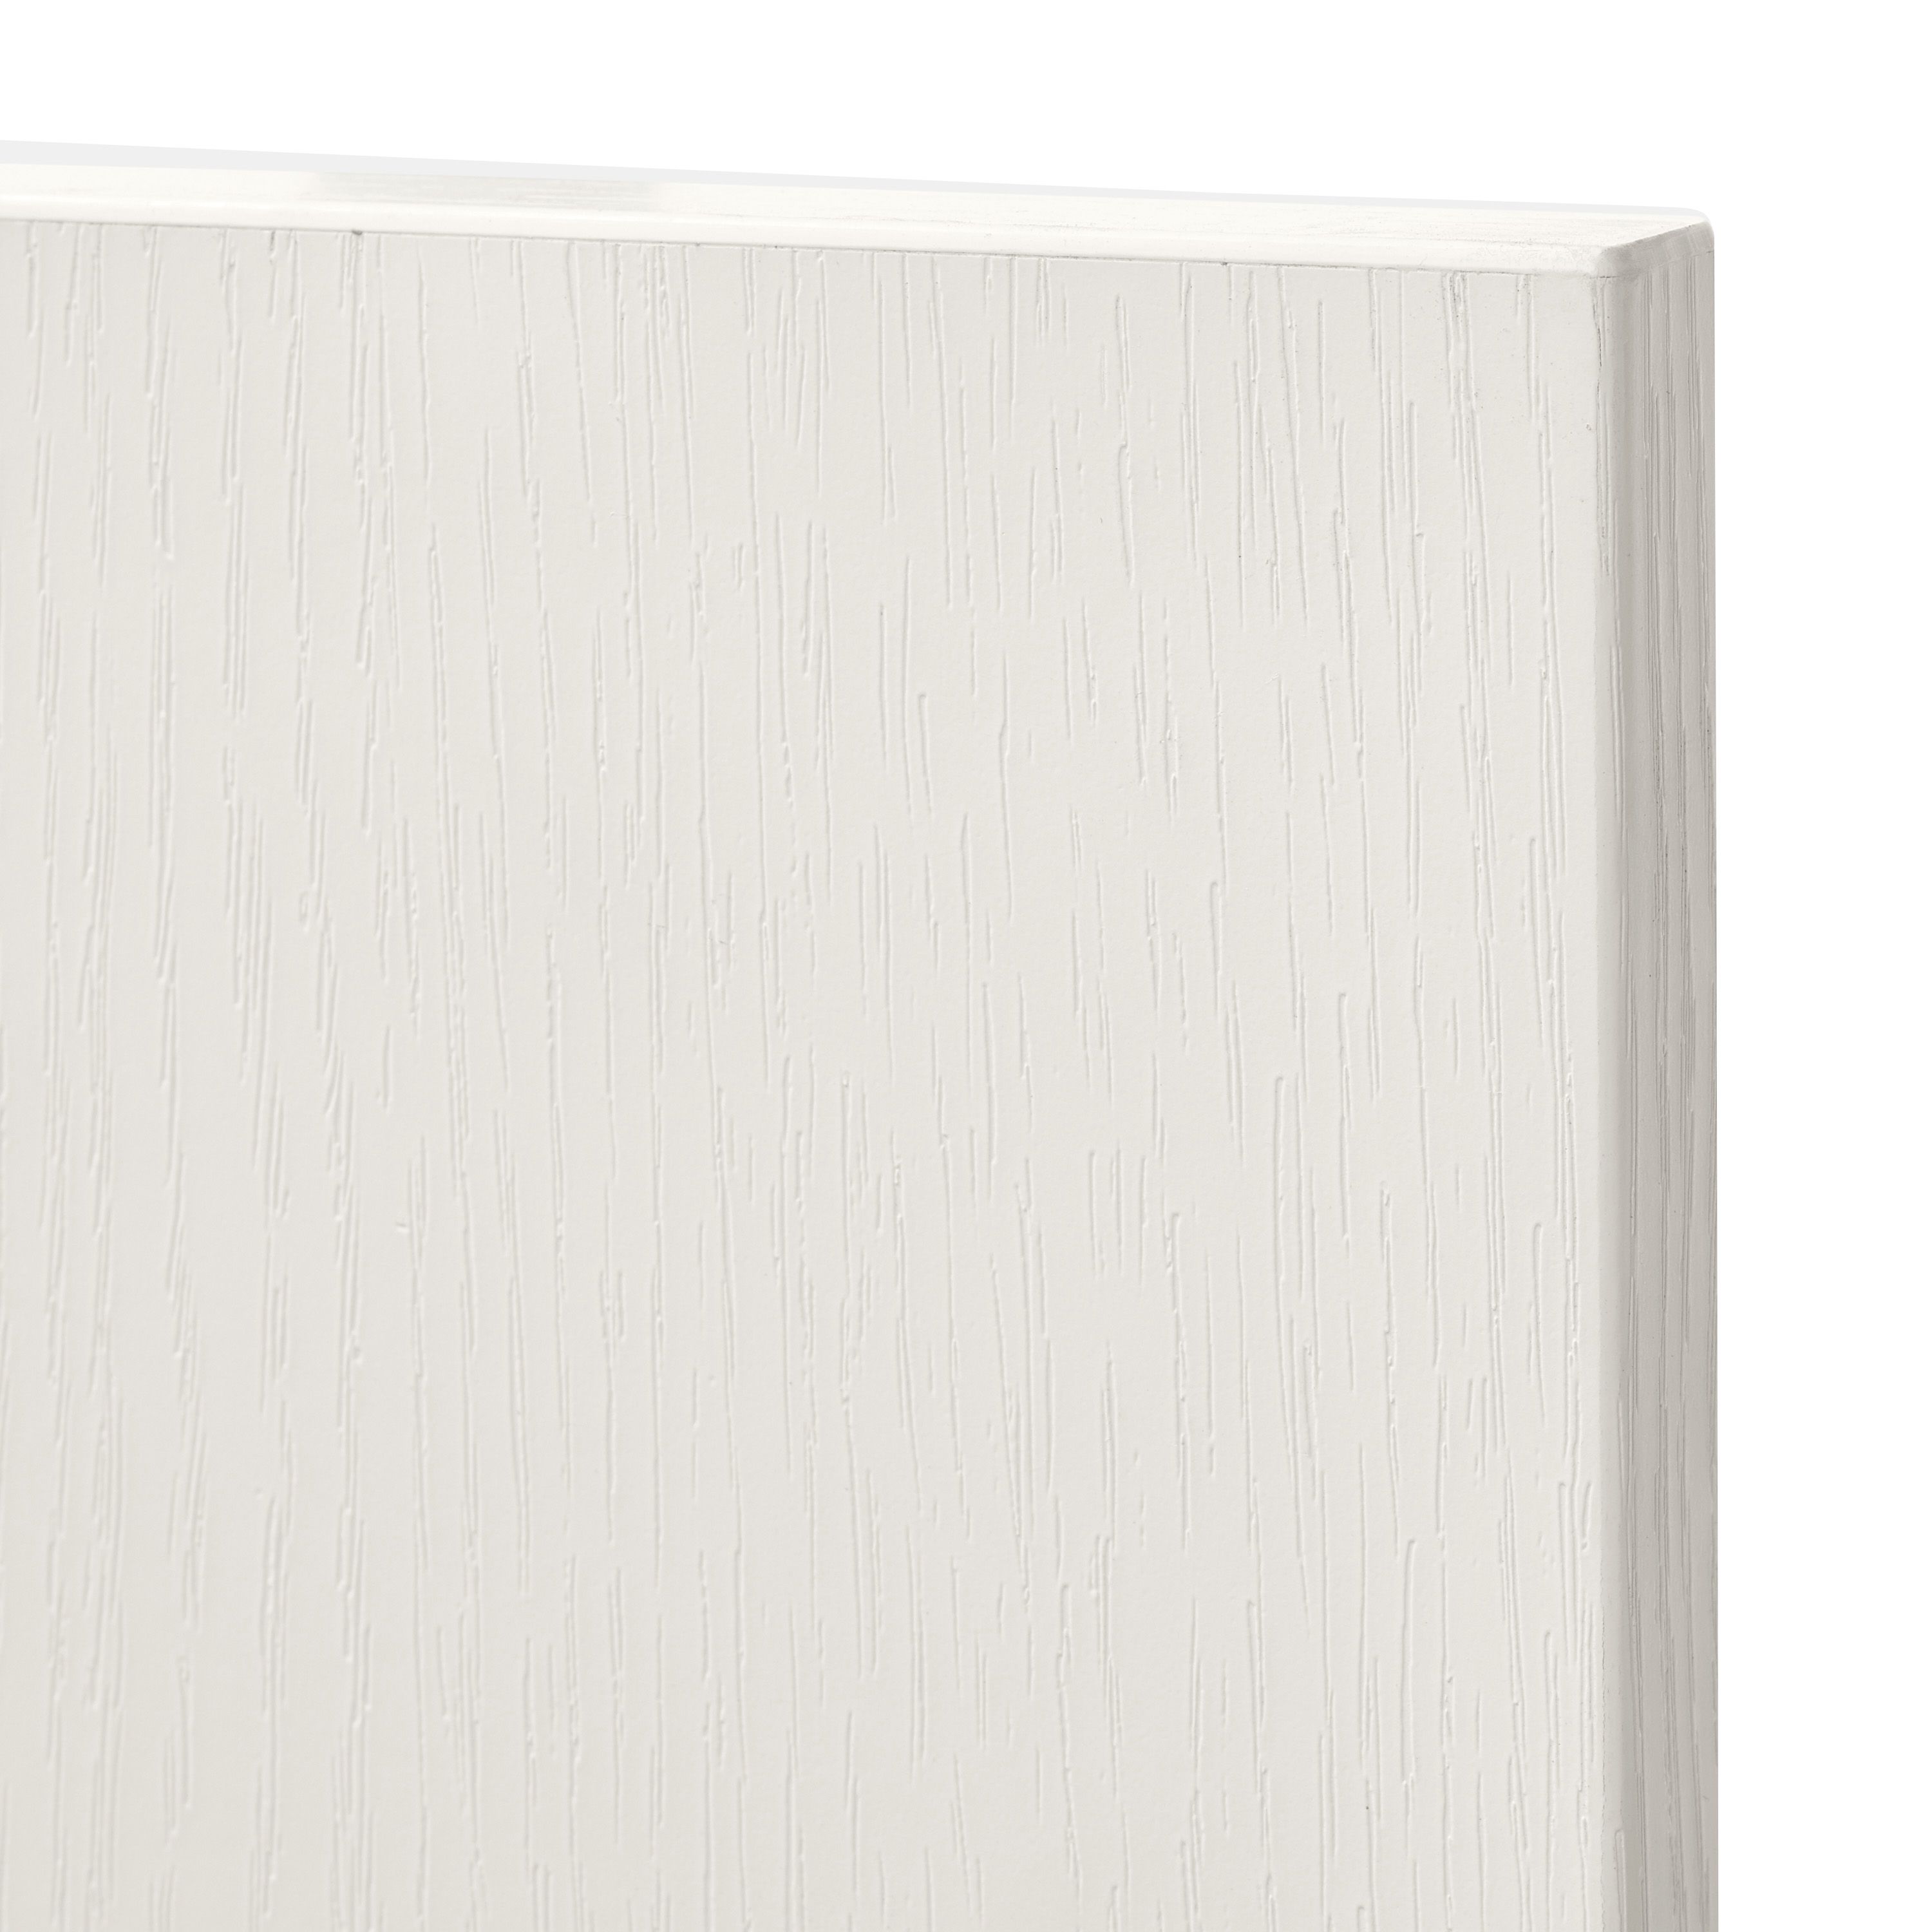 GoodHome Alpinia Matt ivory painted wood effect shaker Tall wall Cabinet door (W)150mm (H)895mm (T)18mm